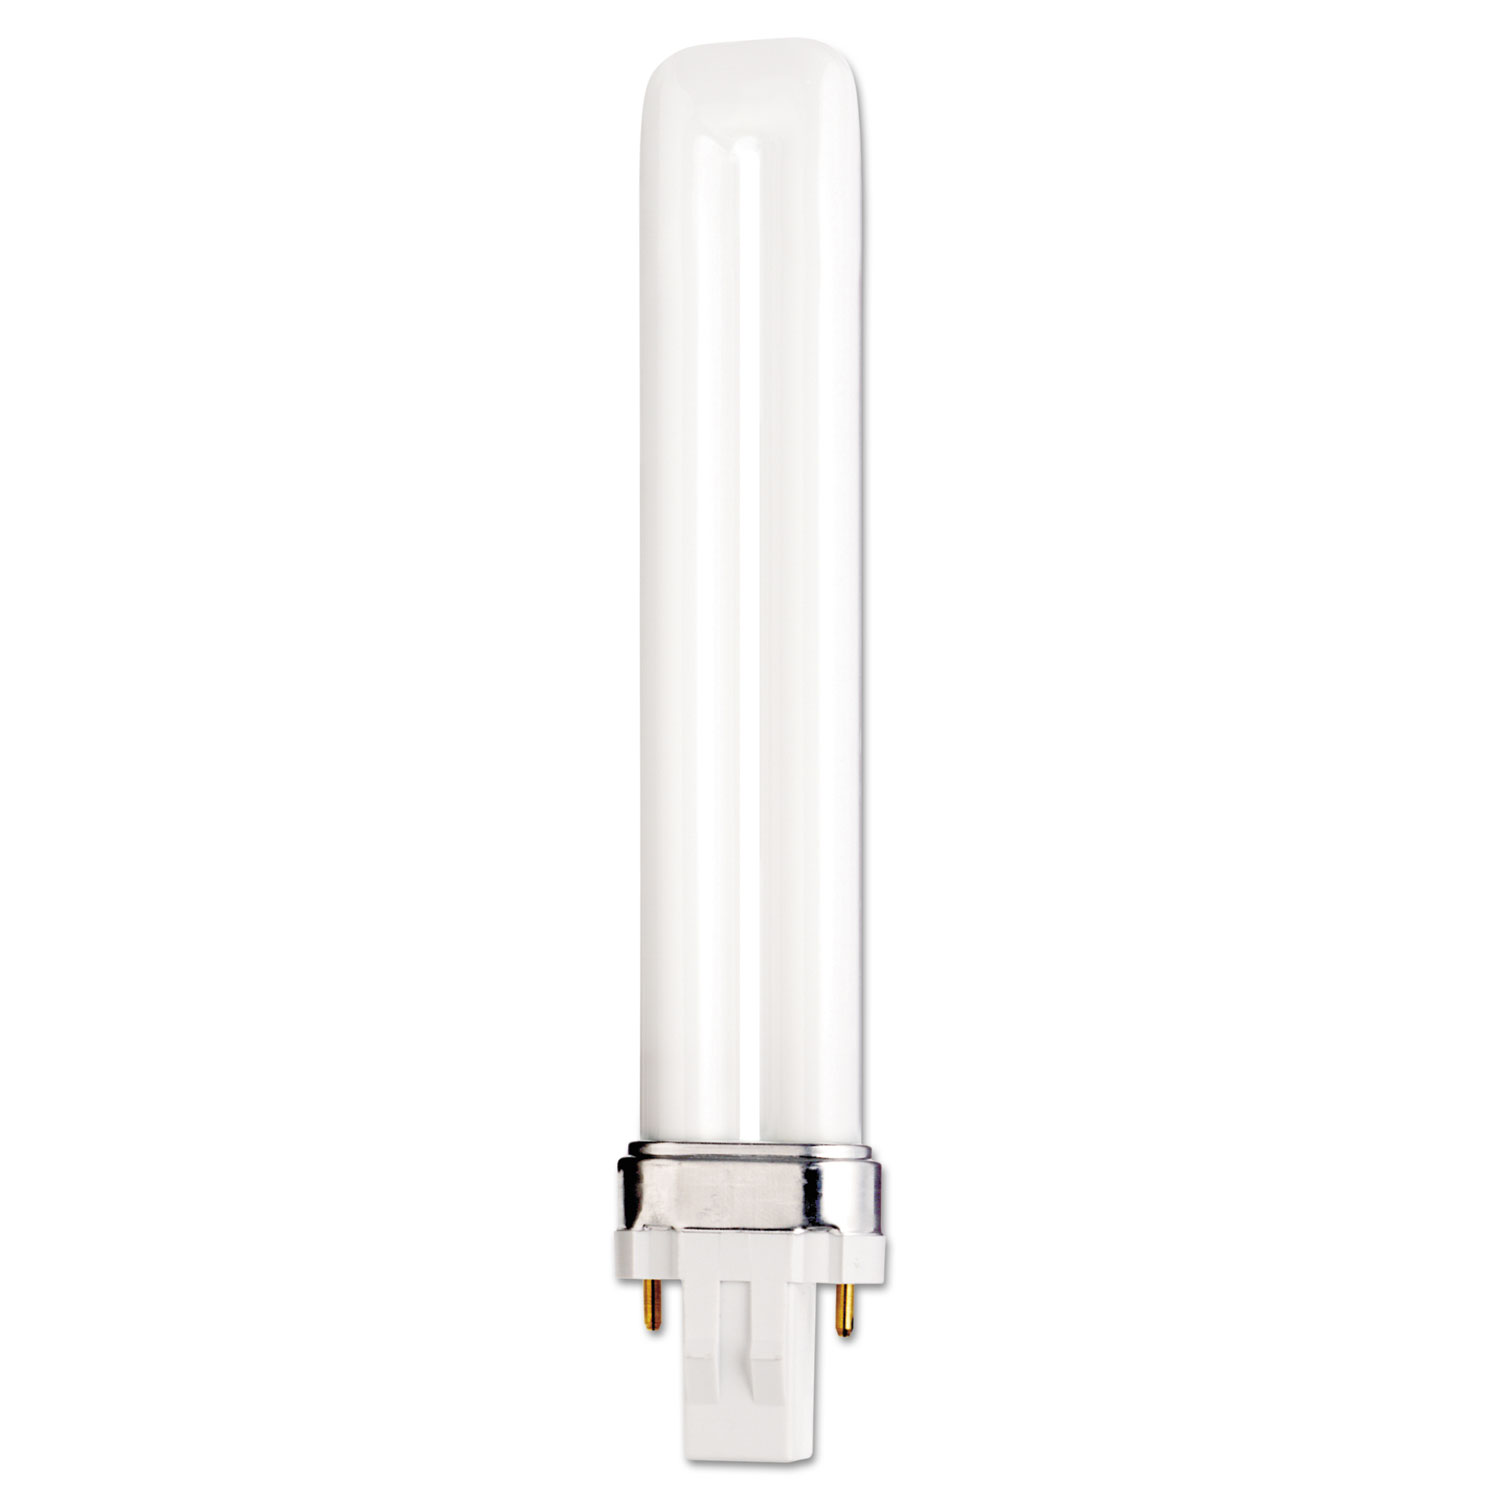 CFL Single Twin Tube Pin Base Bulb, 13 Watts